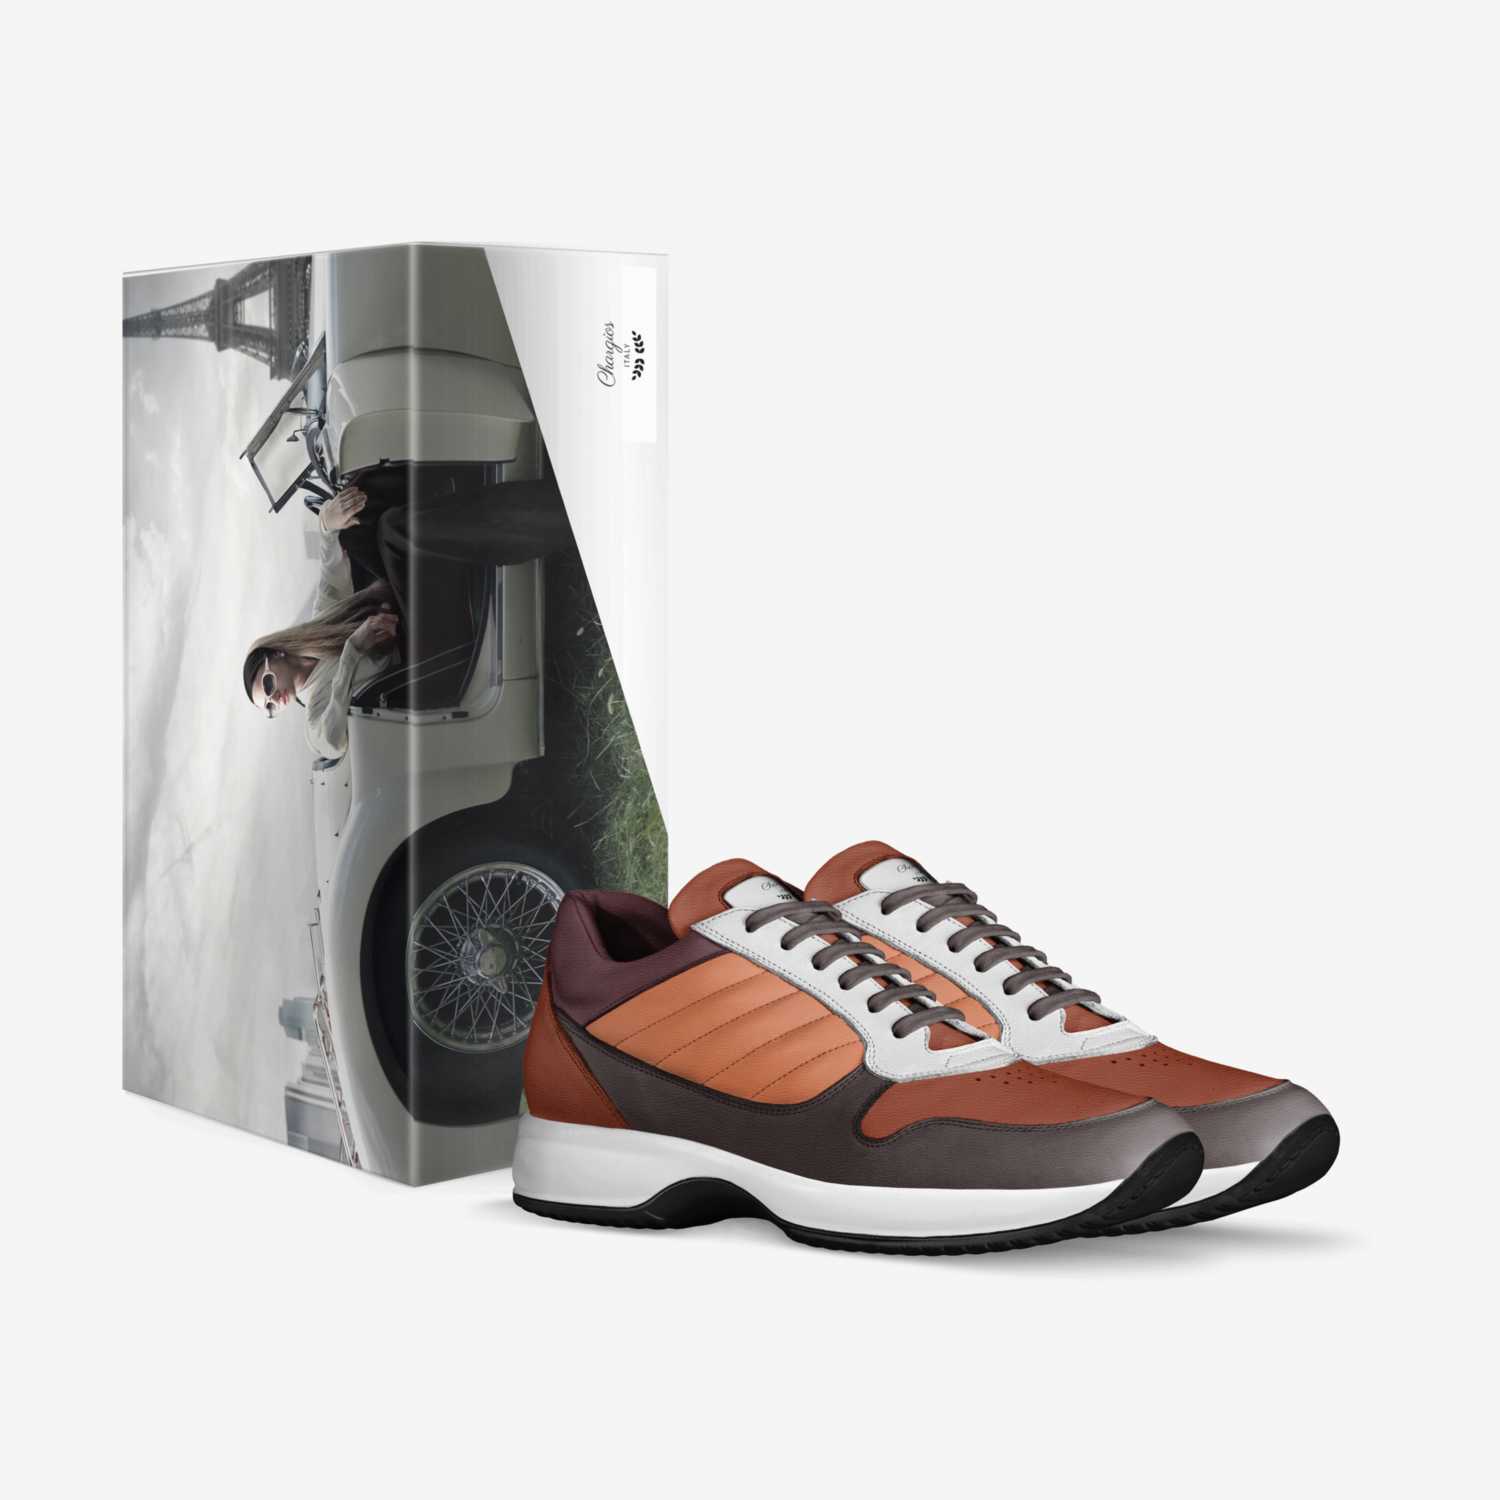 Chargios custom made in Italy shoes by Raegan Riddick | Box view